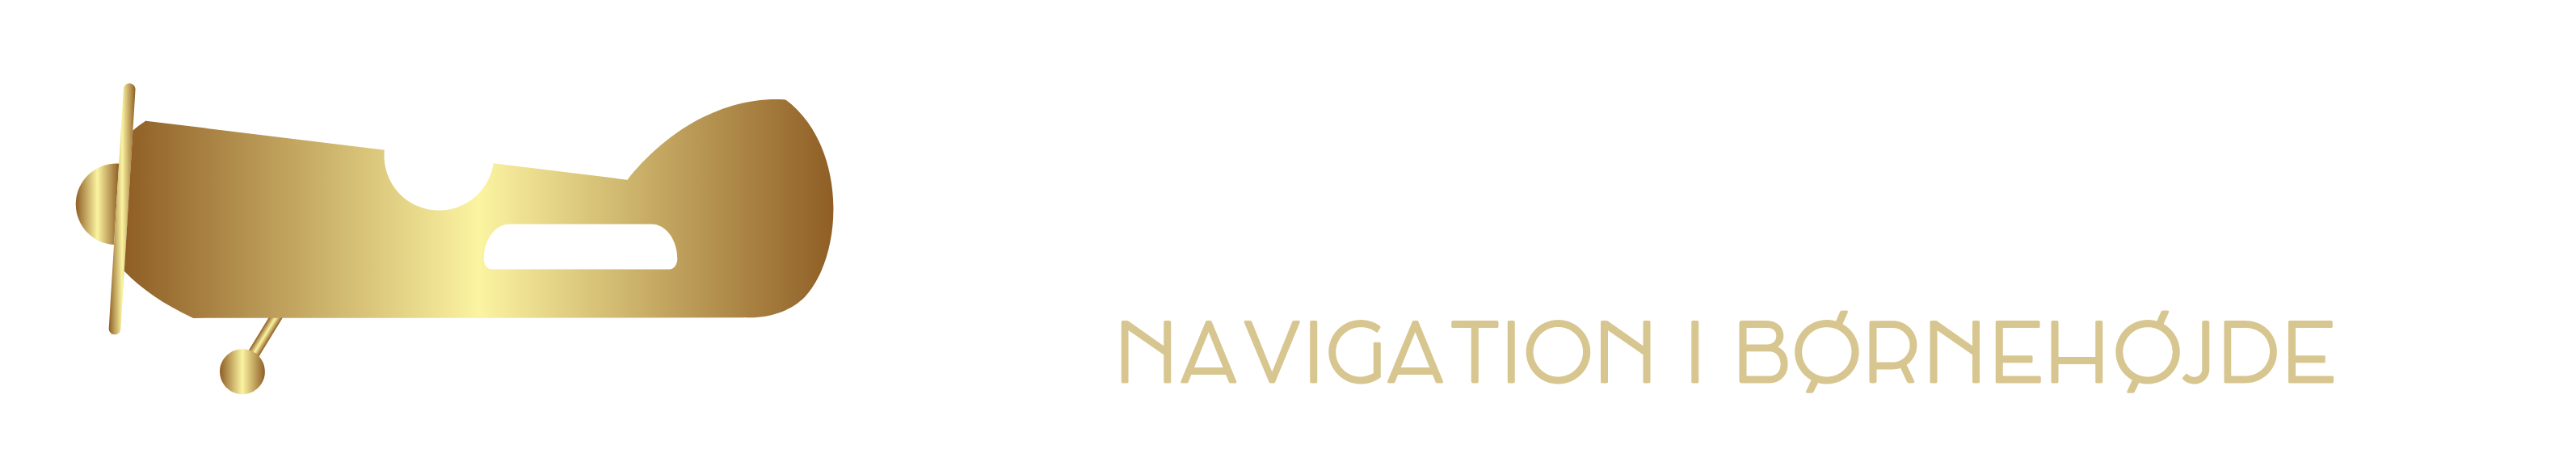 Pilotskolen logo